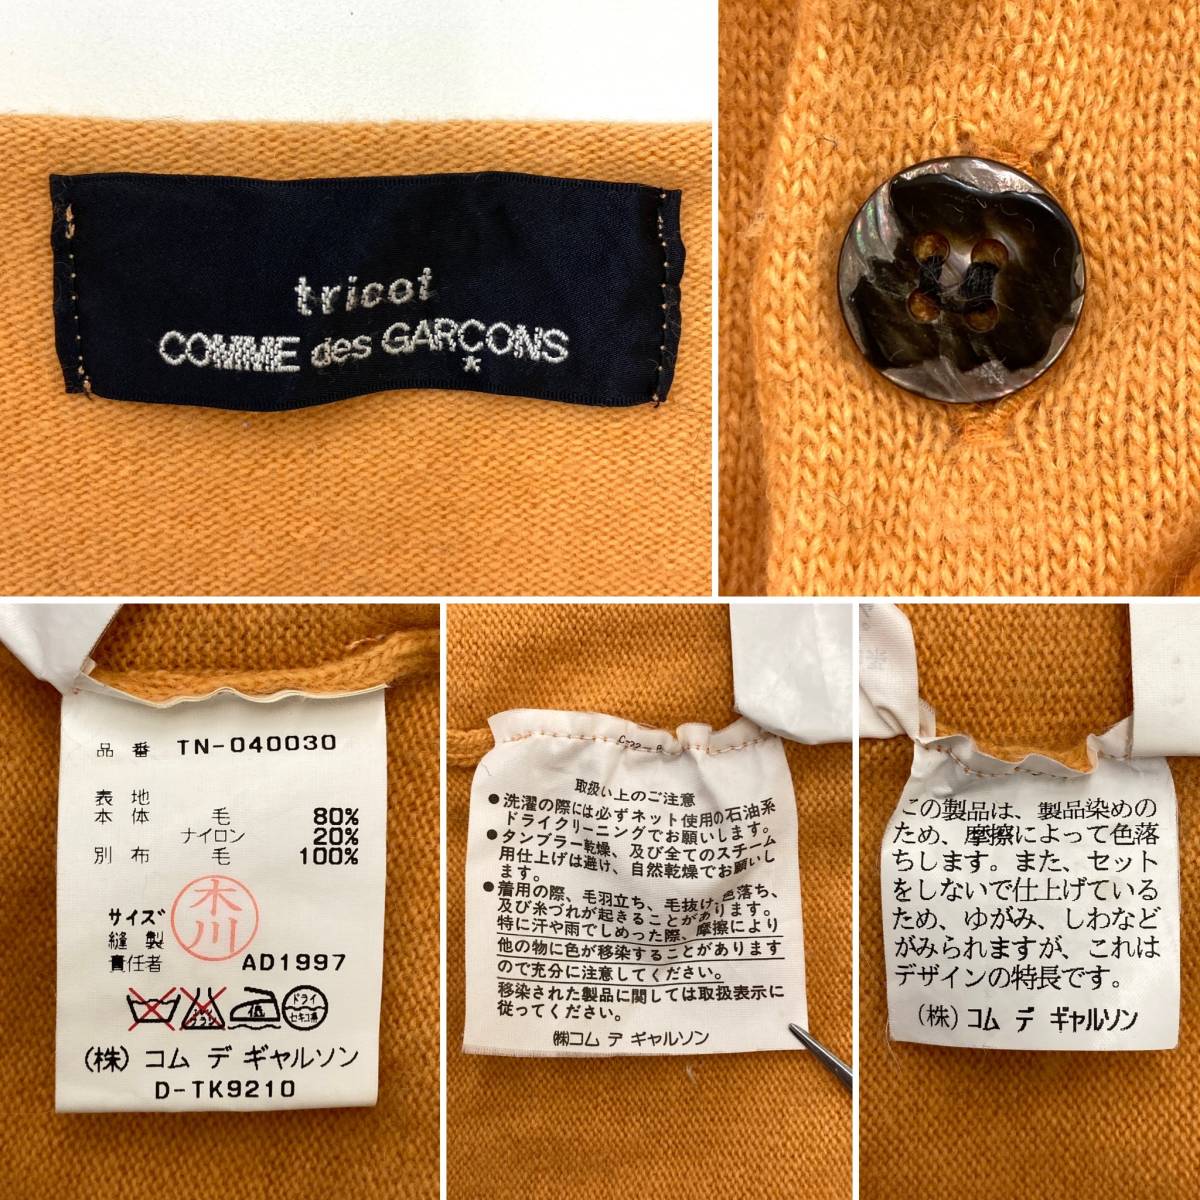 AD1997 tricot COMME des GARCONS оборка вязаный кардиган orange Toriko Comme des Garcons свитер 90s VINTAGE archive 3050213